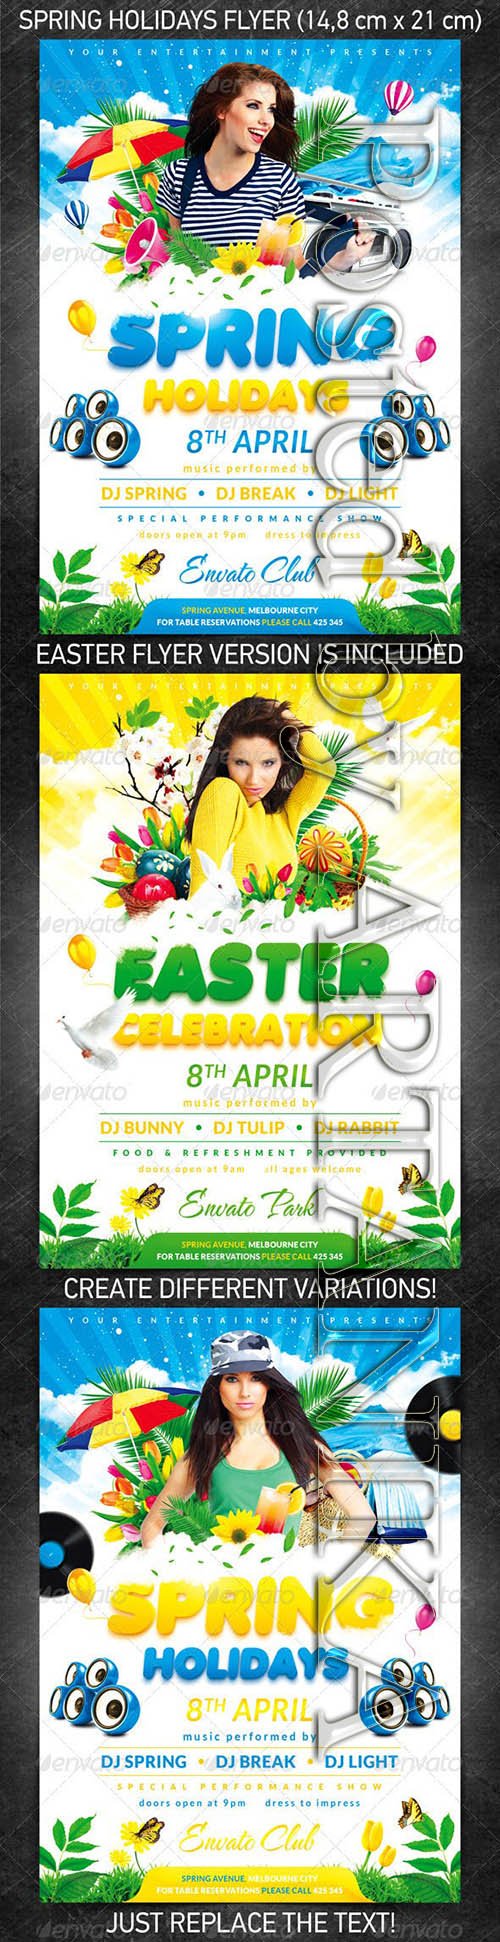 GraphicRiver - Spring Holidays / Easter Celebration Party Flyer 1862154